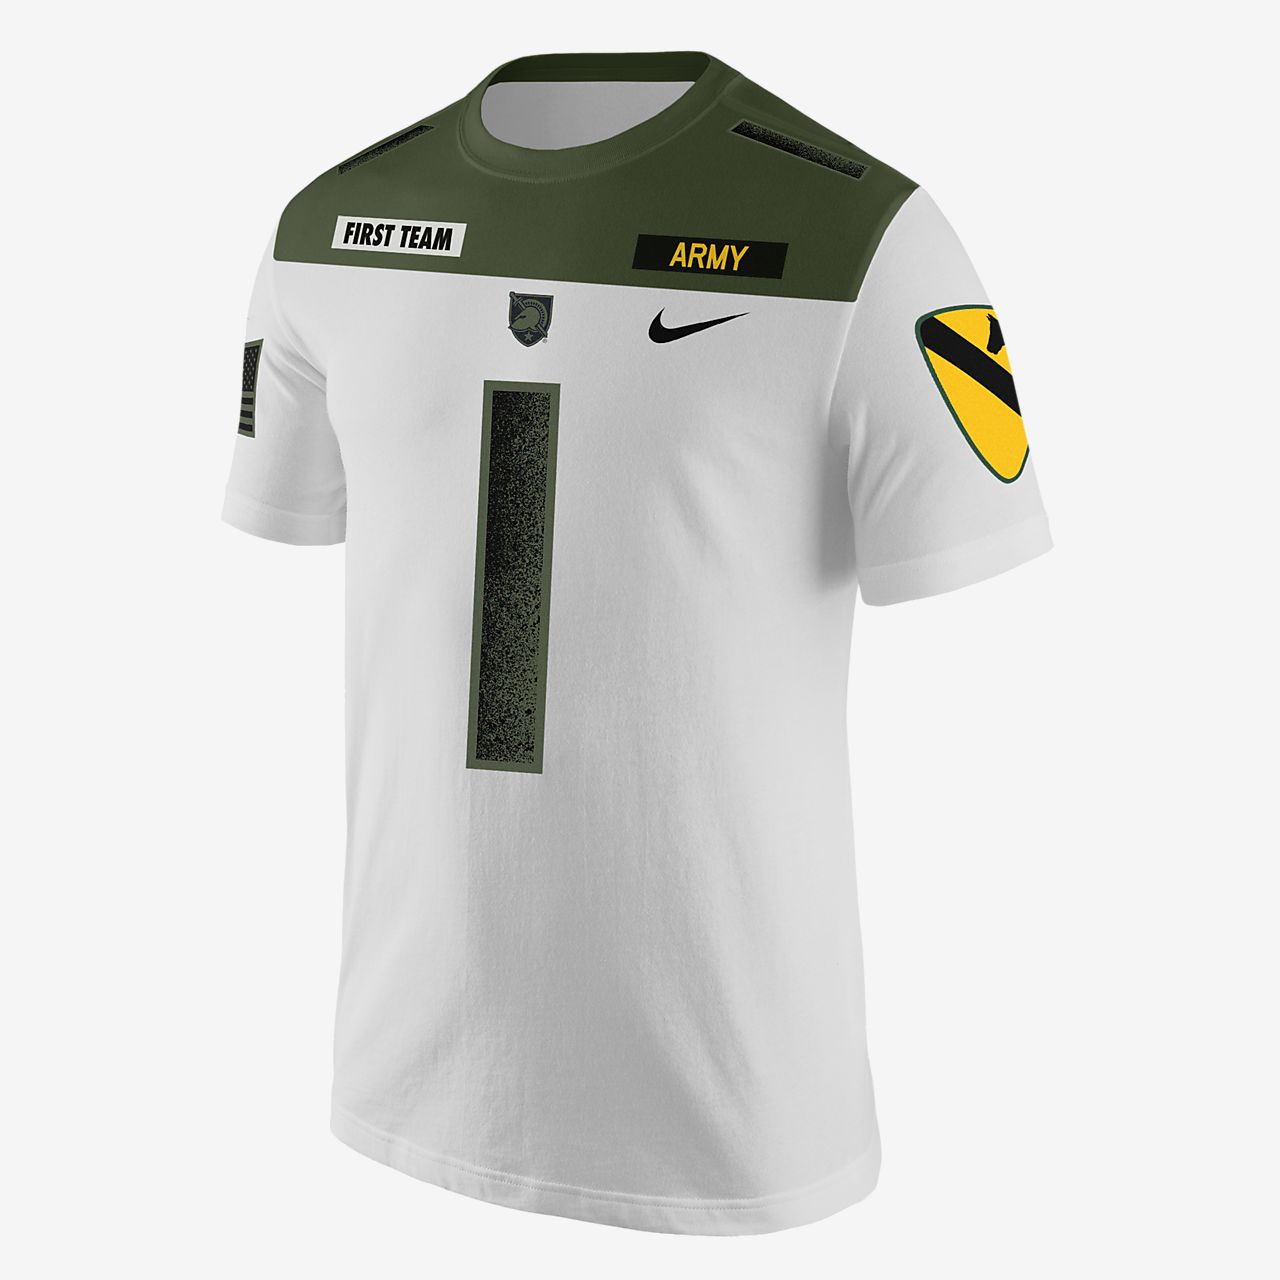 nike army t shirt